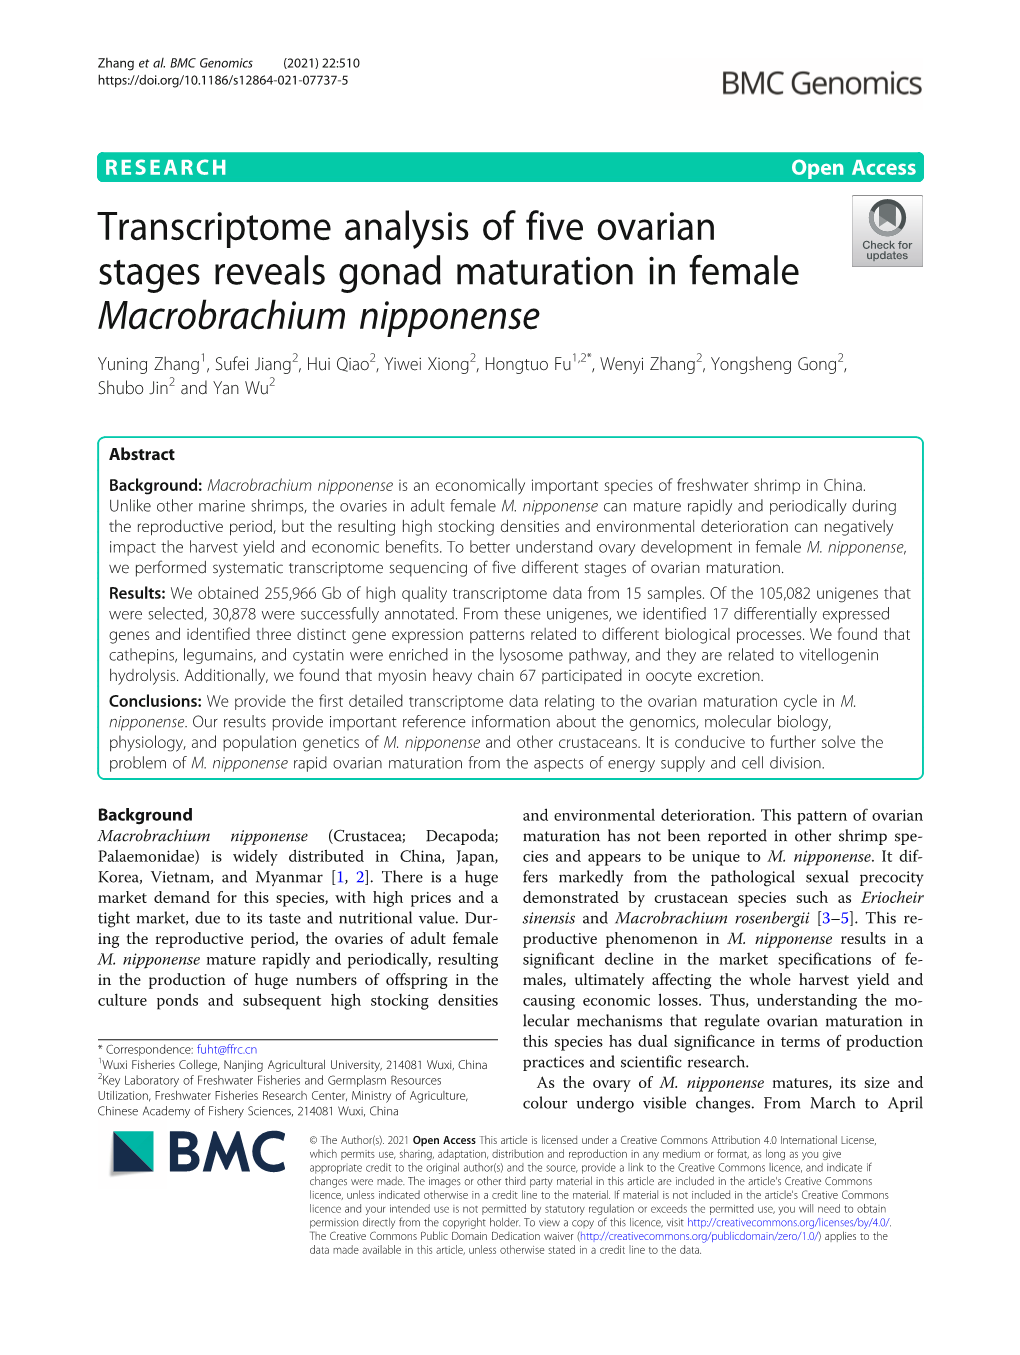 Transcriptome Analysis of Five Ovarian Stages Reveals Gonad Maturation in Female Macrobrachium Nipponense